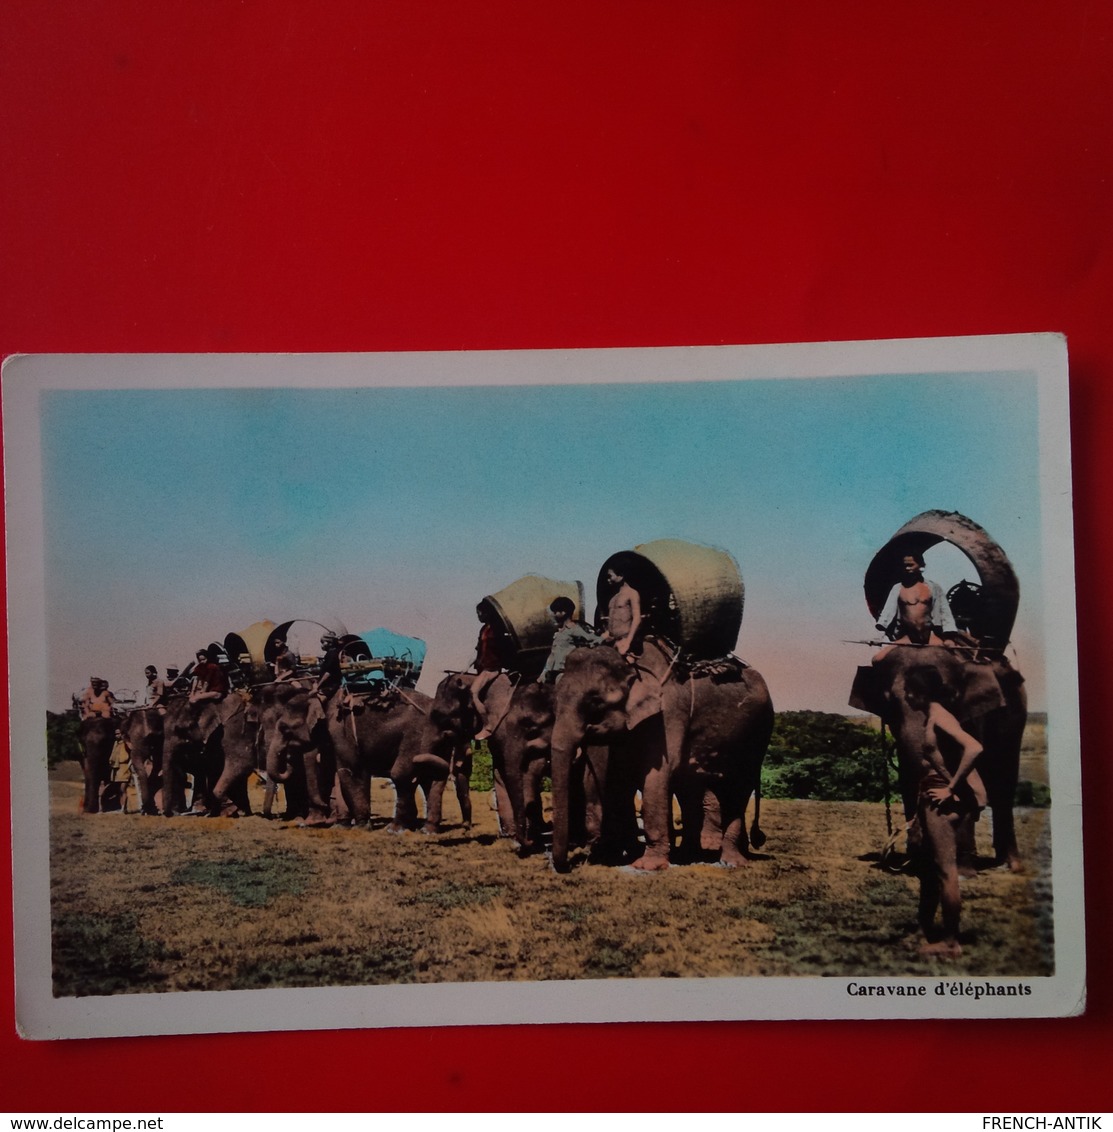 CARAVANE D ELEPHANTS - Elefanten